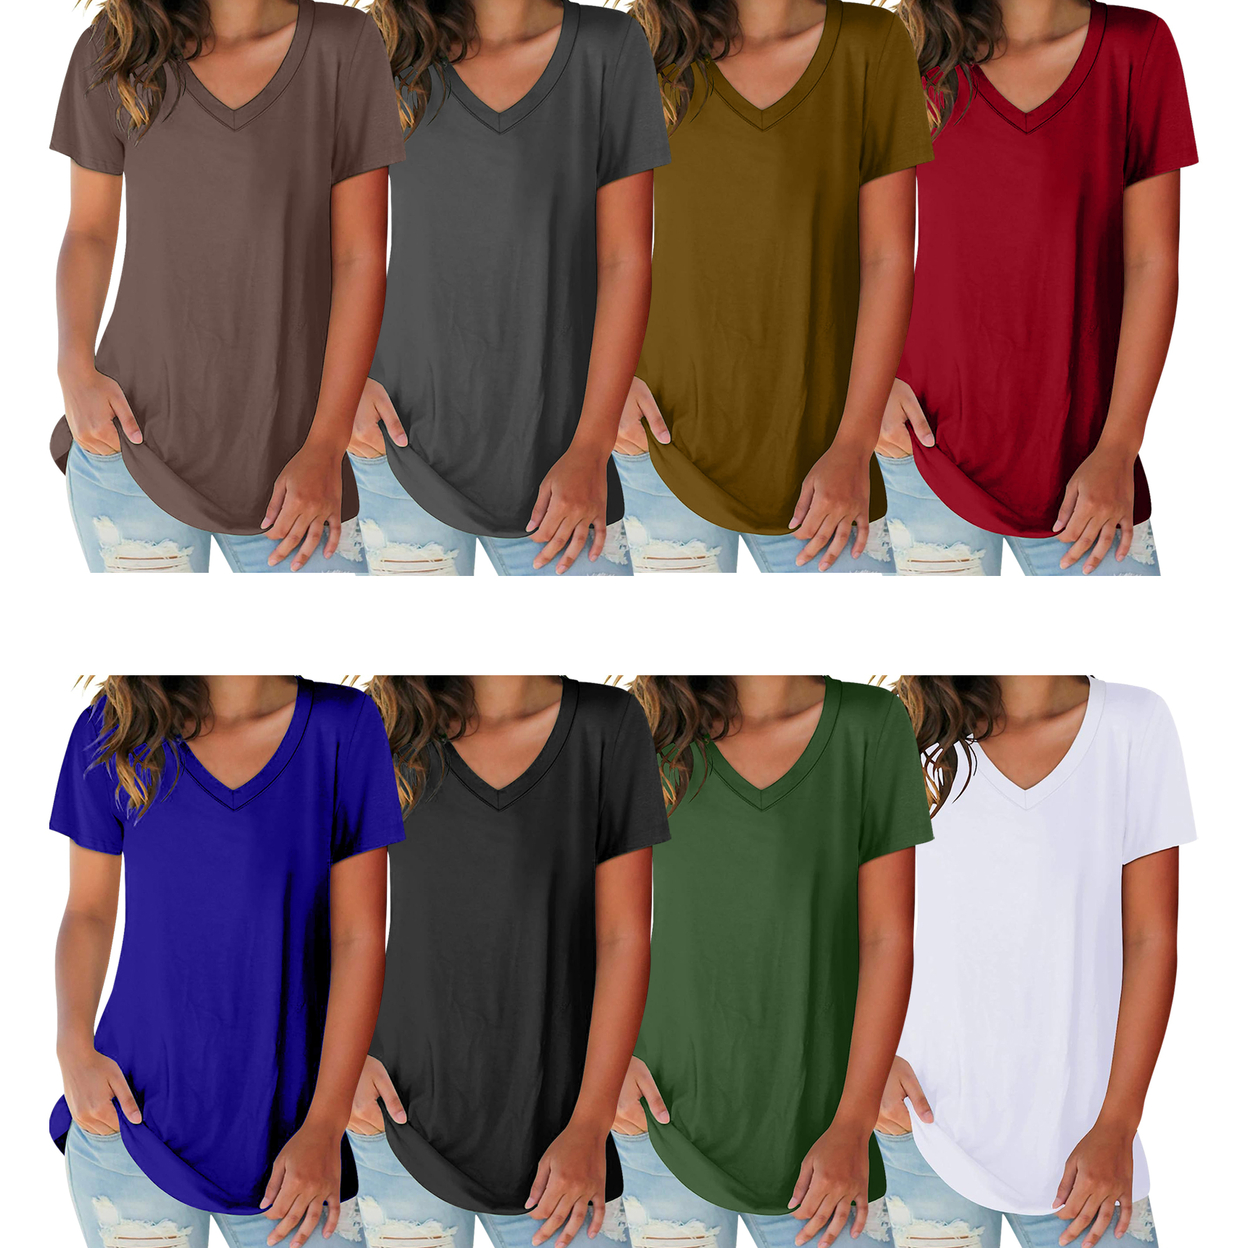 3-Pack: Women's Ultra Soft Smooth Cotton Blend Basic V-Neck Short Sleeve Shirts - Black, White, Brown, Medium